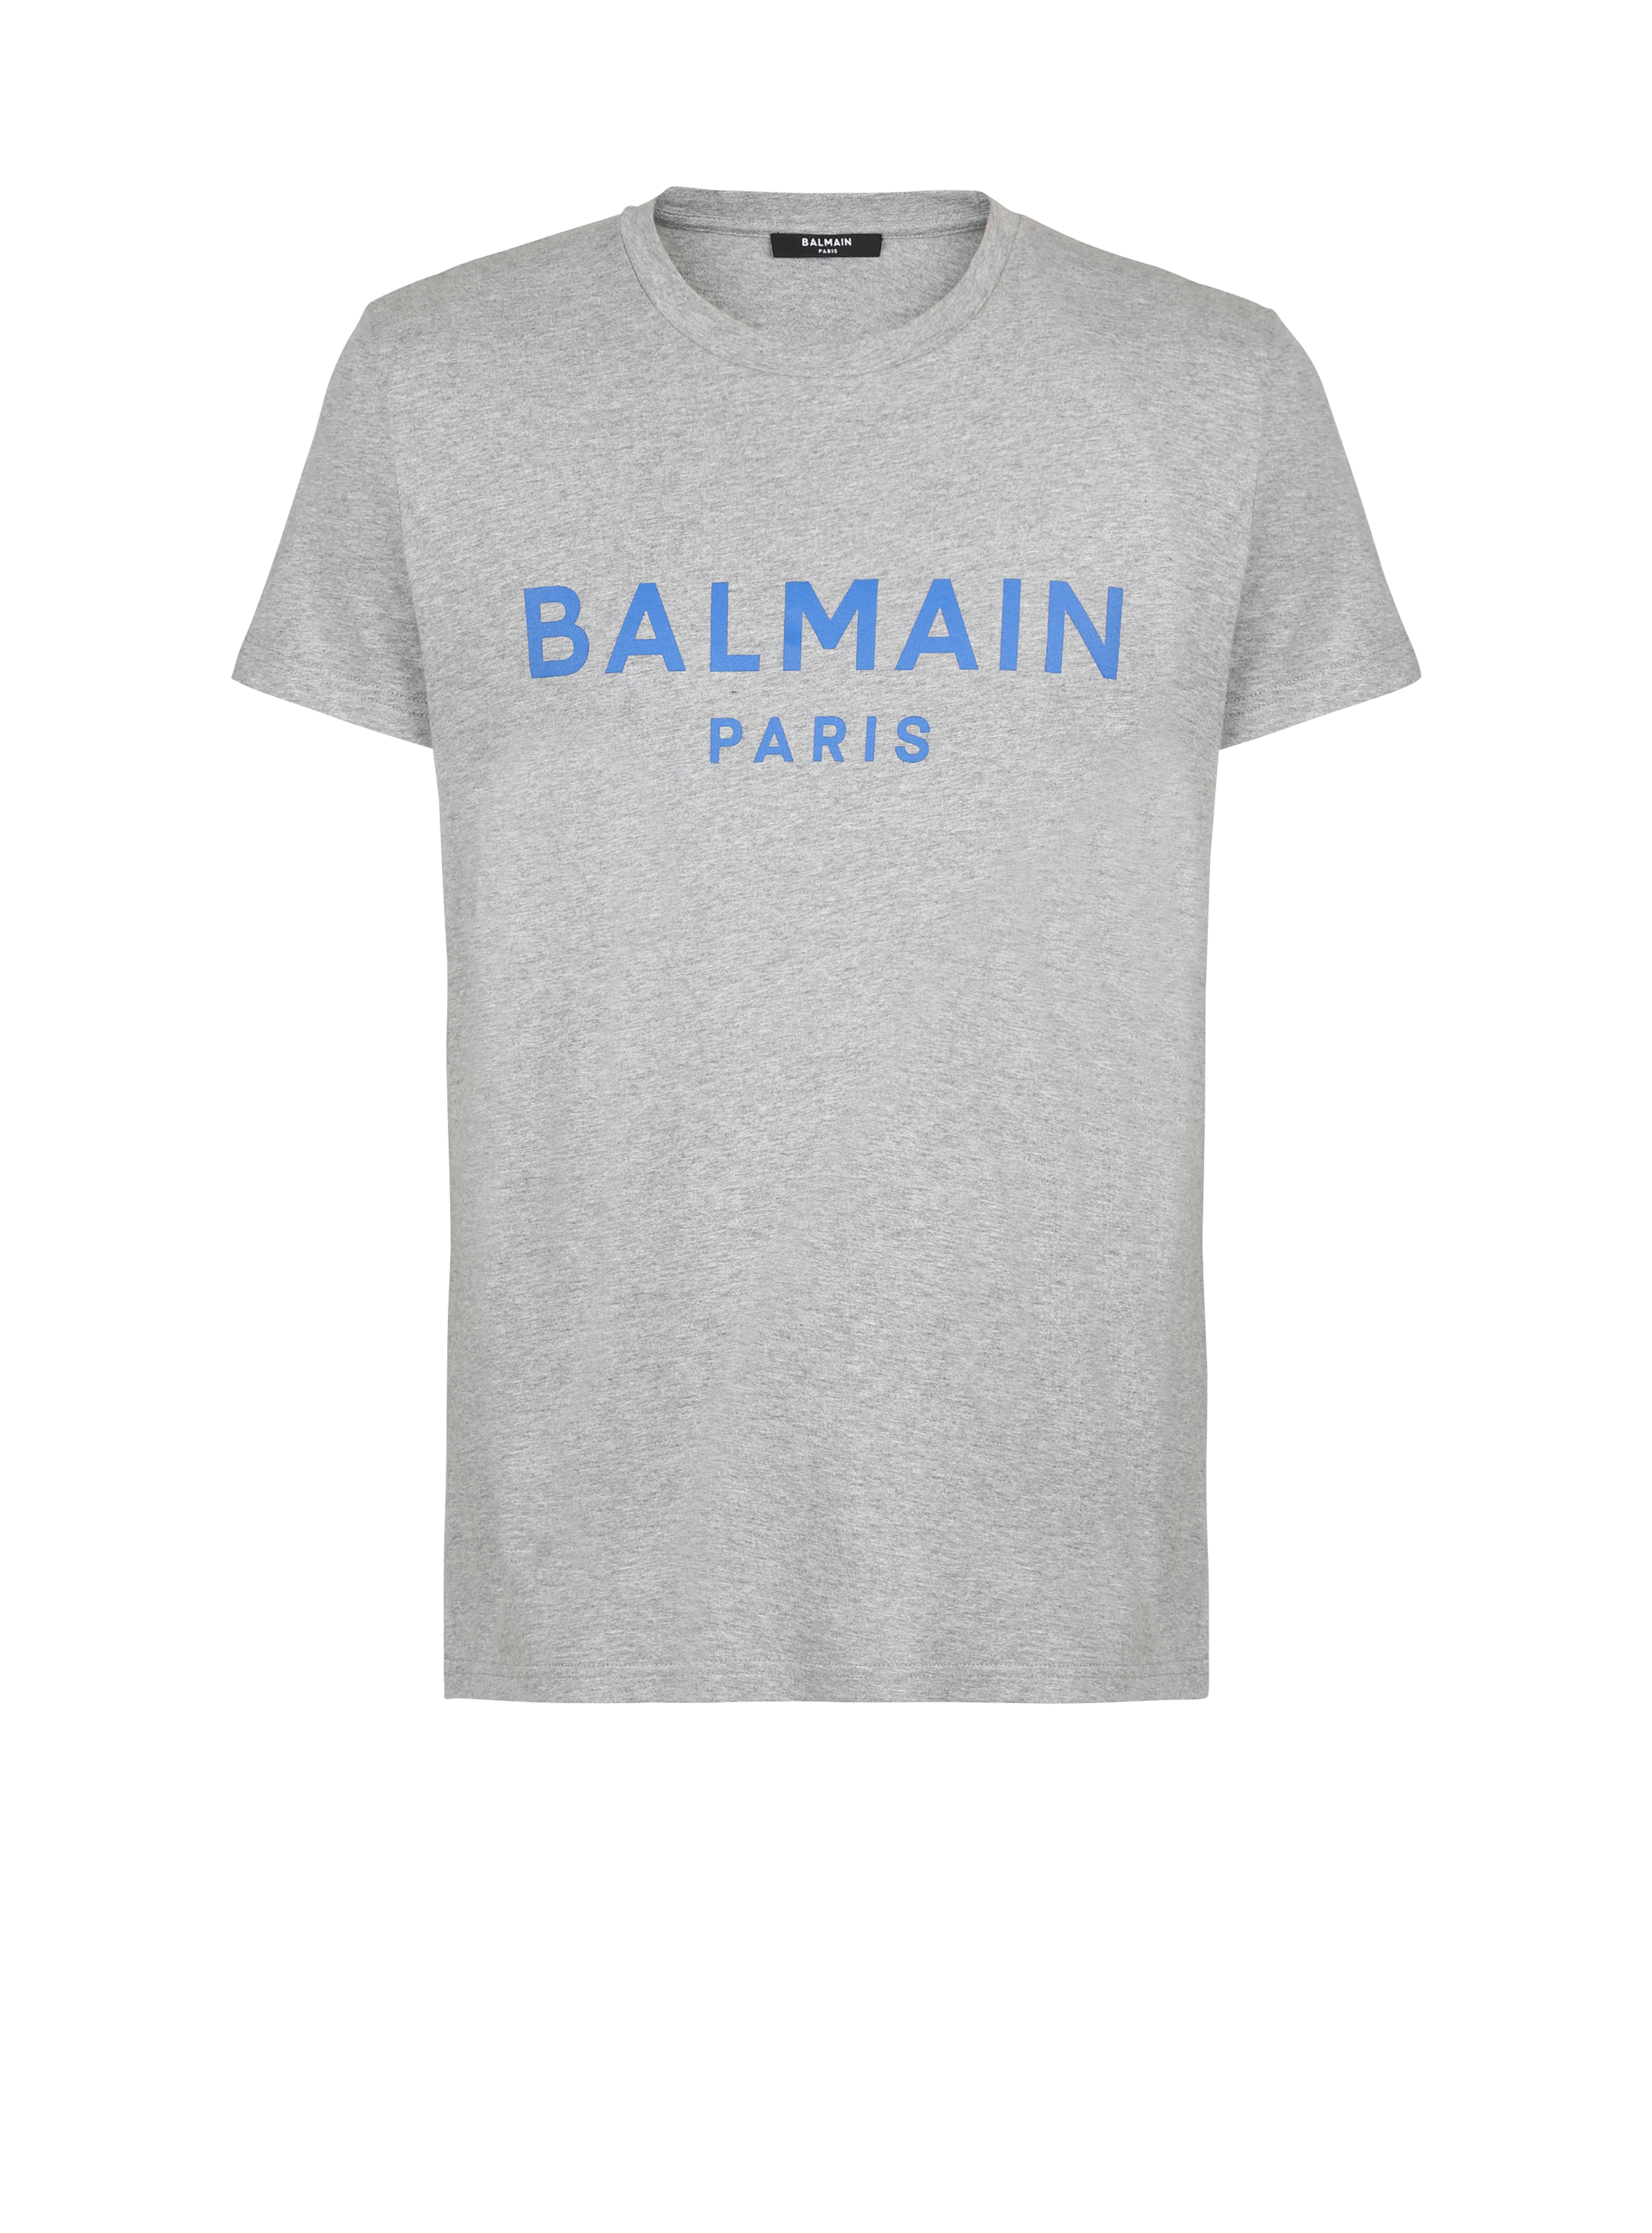 EXCLUSIVE - Cotton T-shirt with Balmain logo print, grey